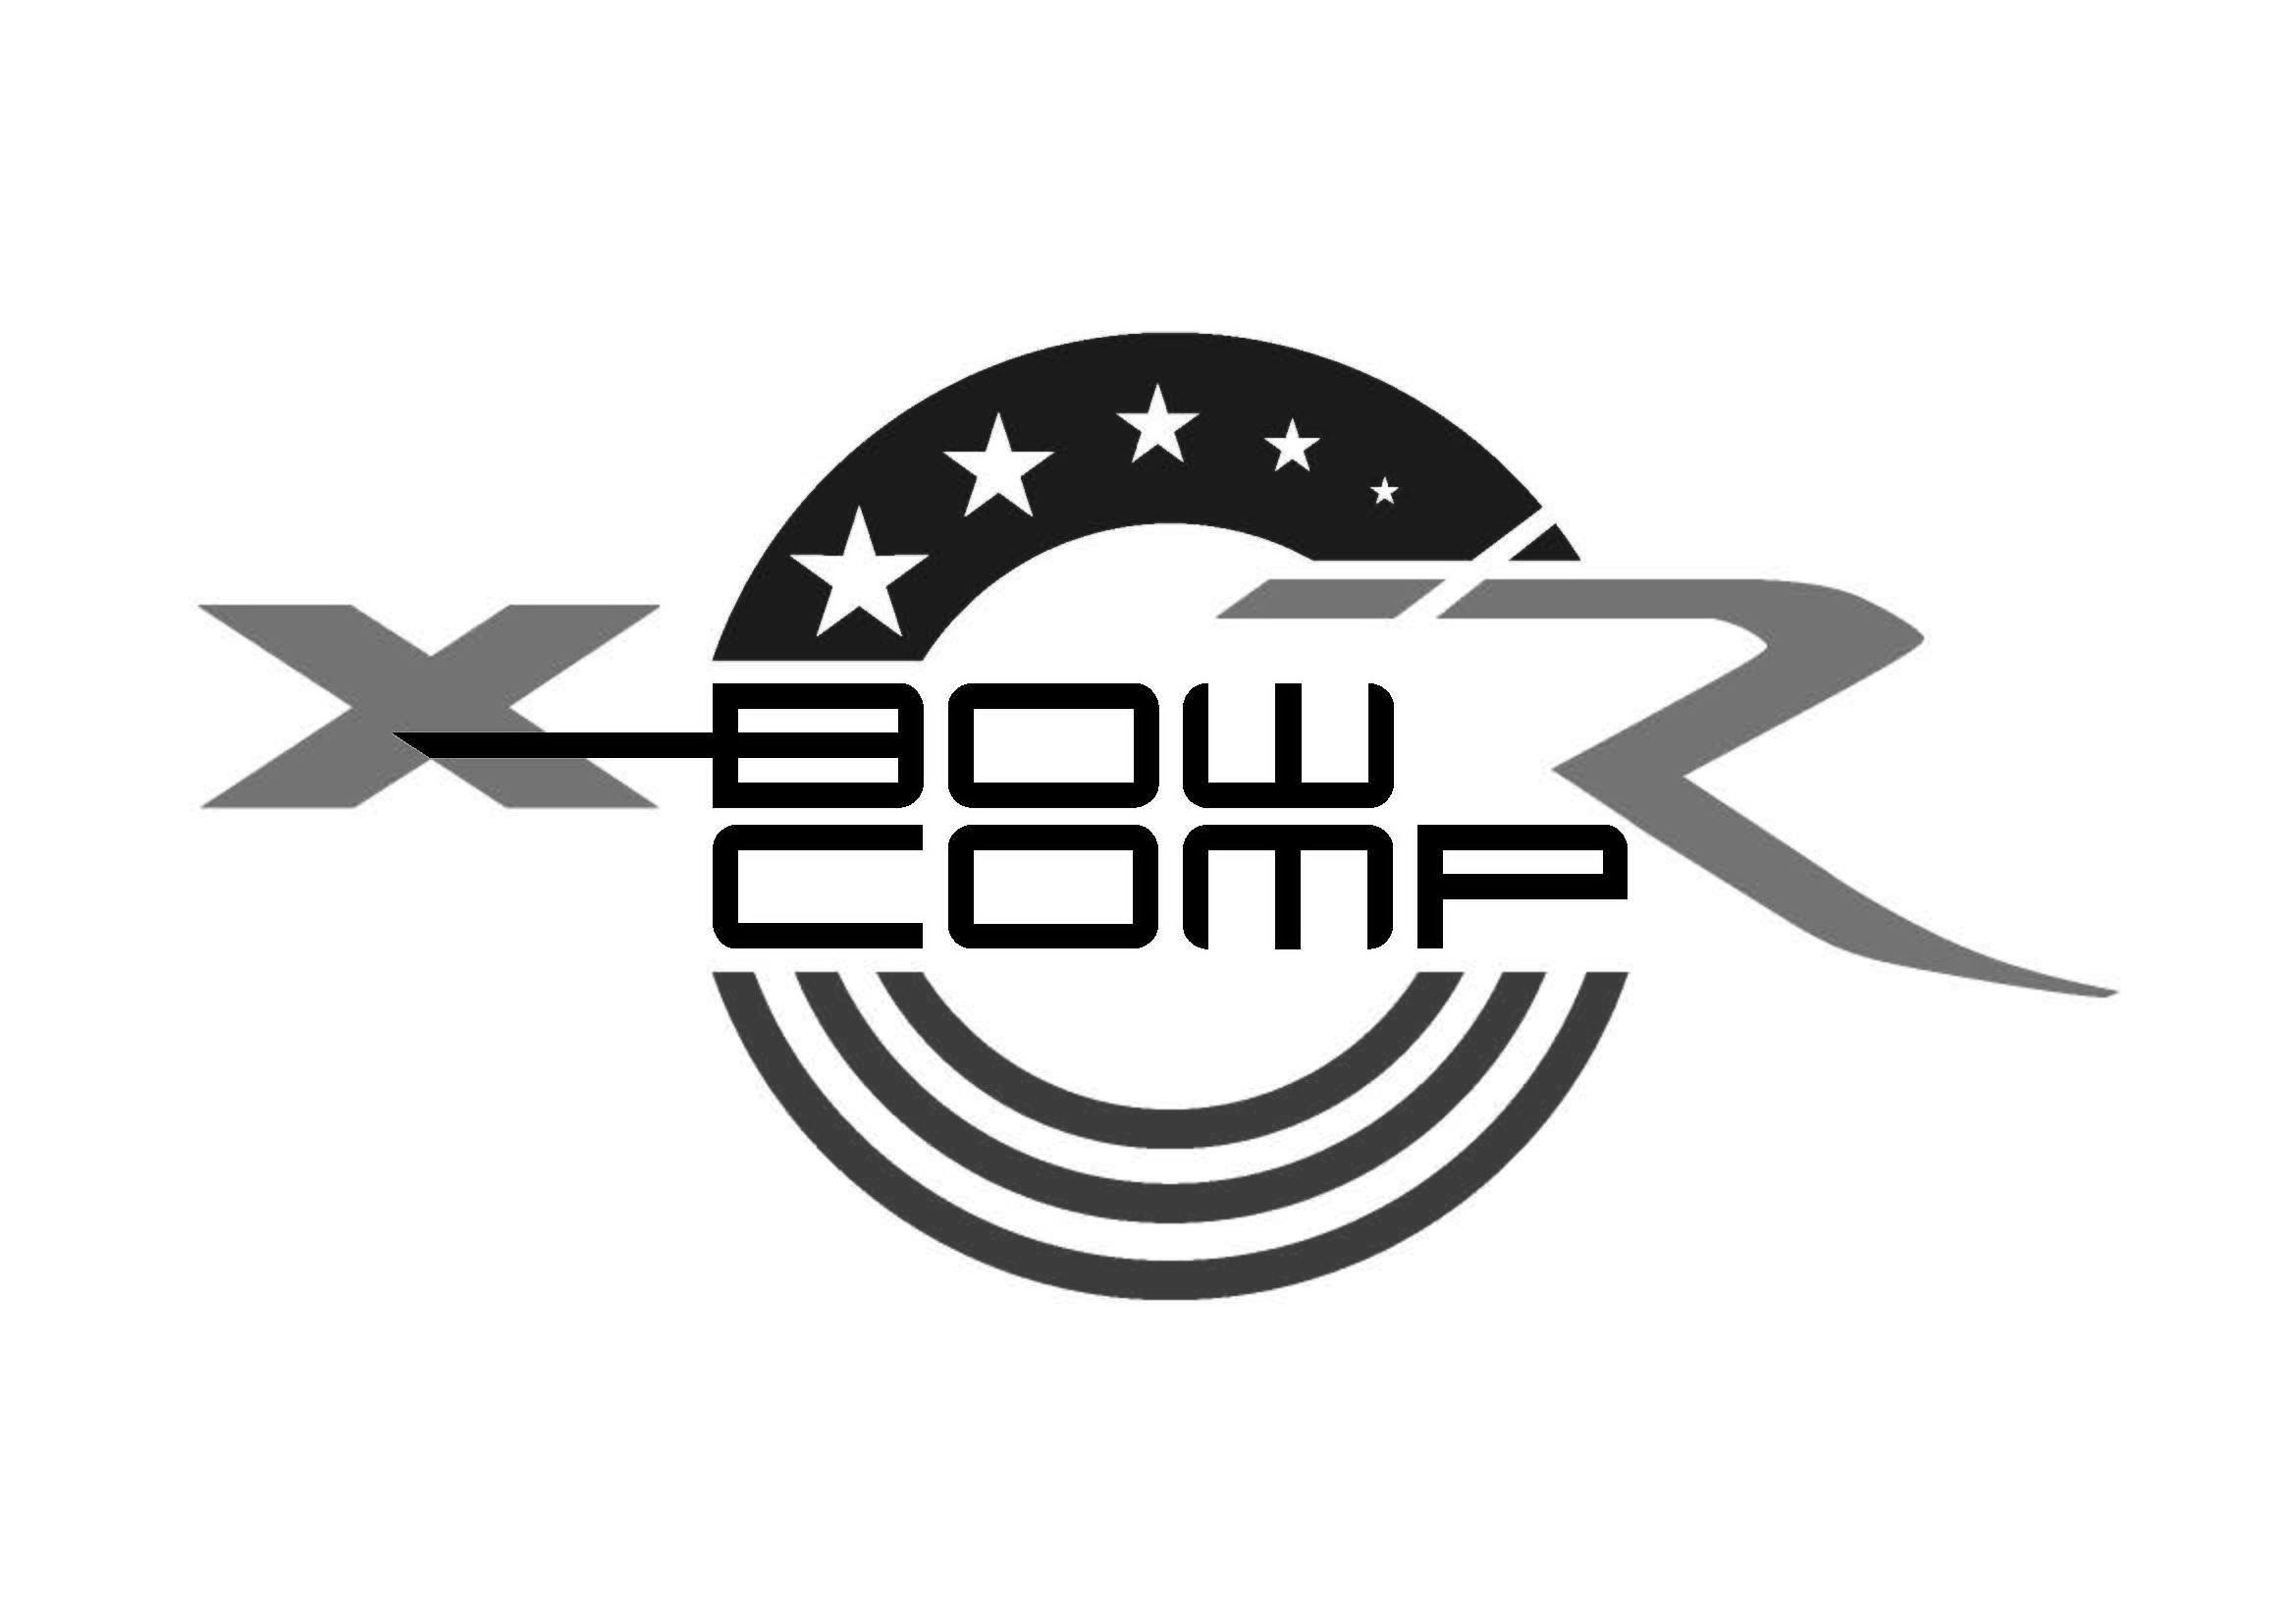 Trademark Logo X-BOW COMP R